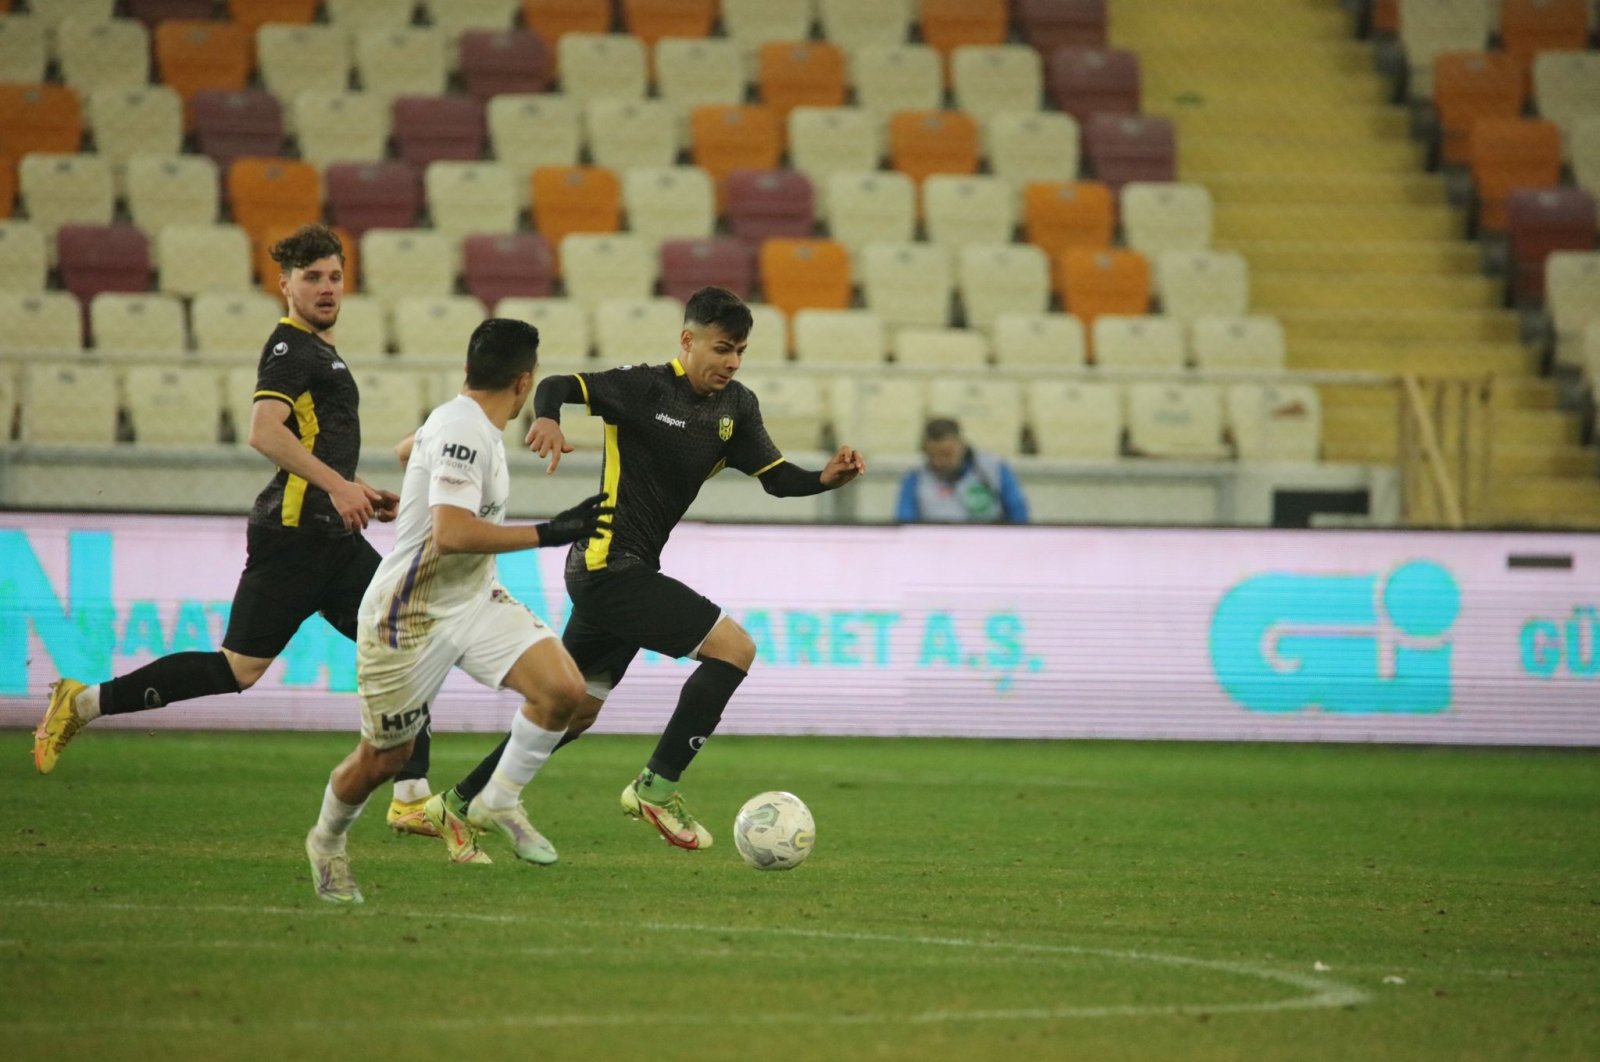 Yeni Malatyaspor berjuang untuk bangkit kembali setelah gempa 6 Februari